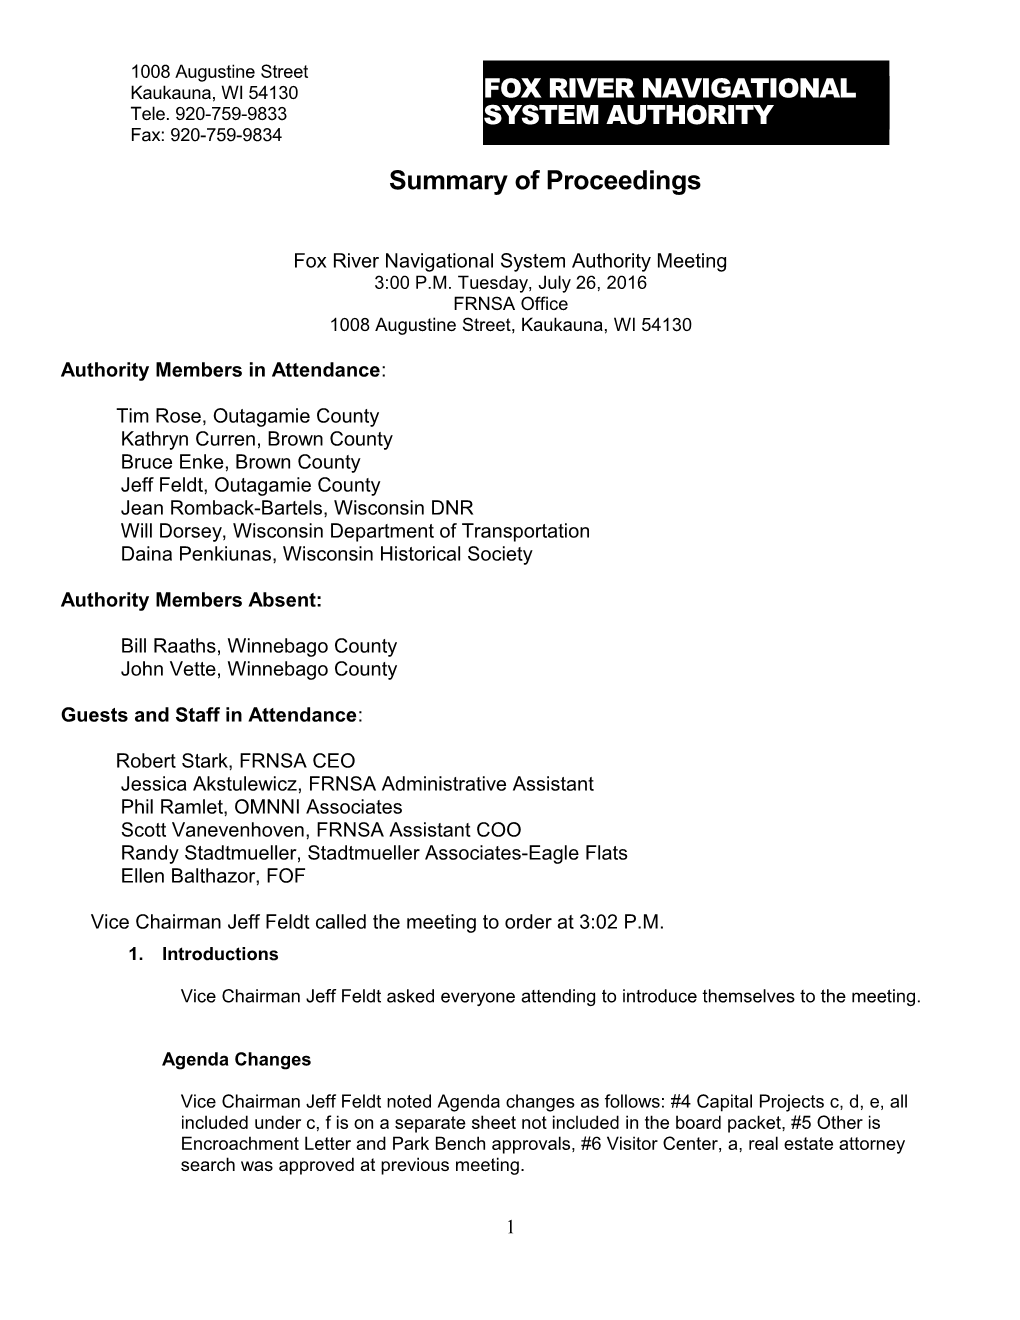 Summary of Proceedings